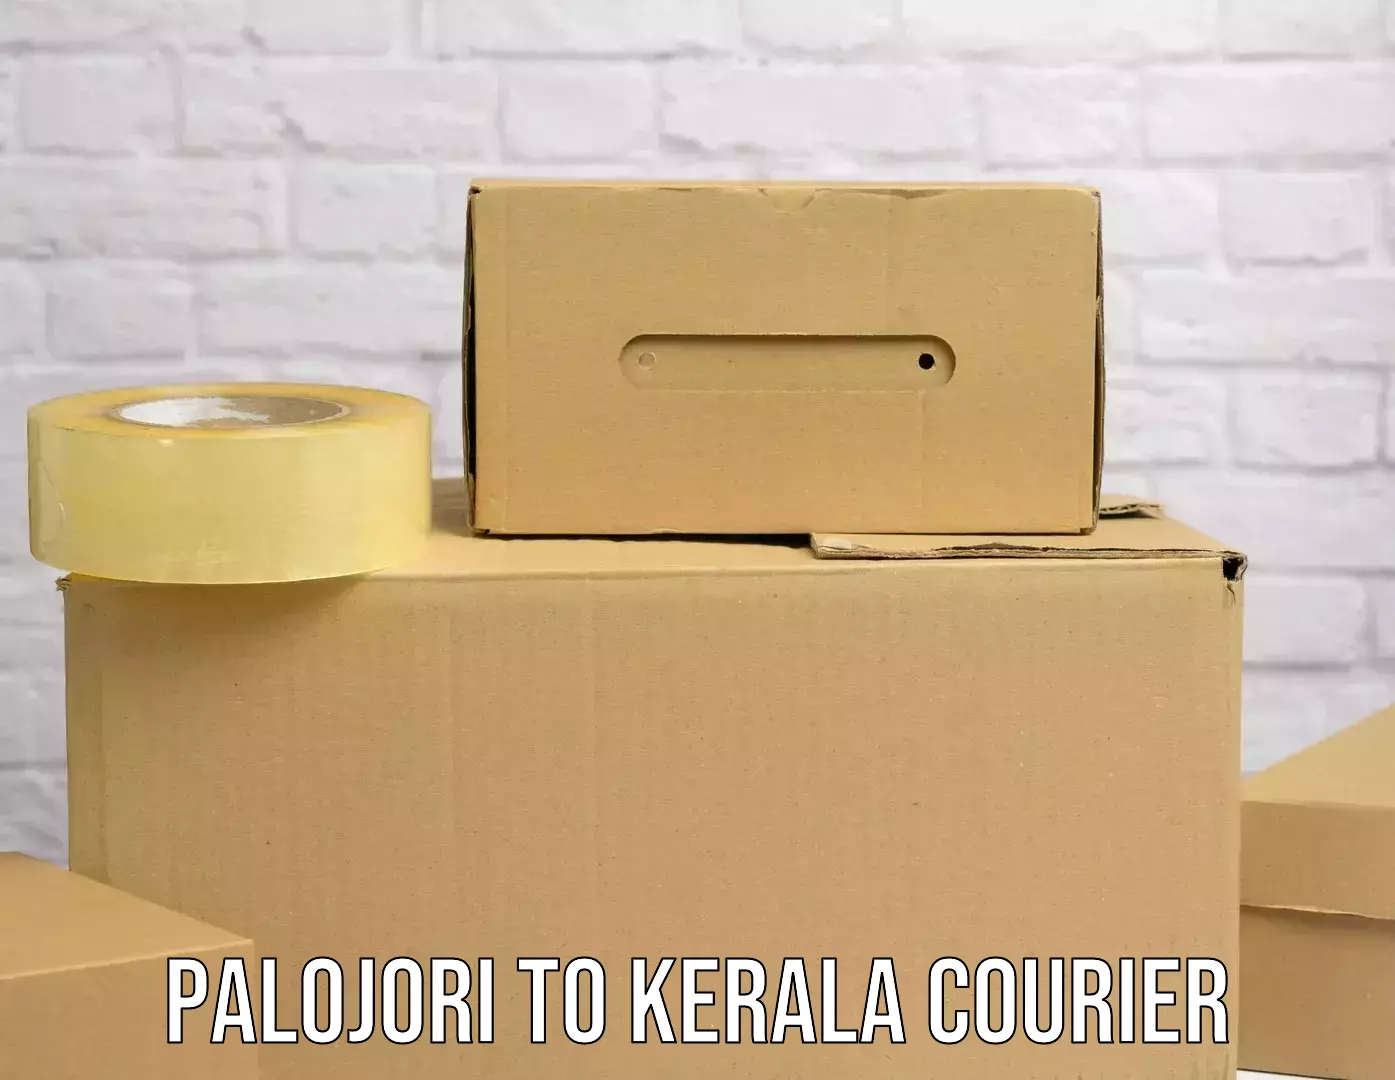 Express logistics providers Palojori to Kerala